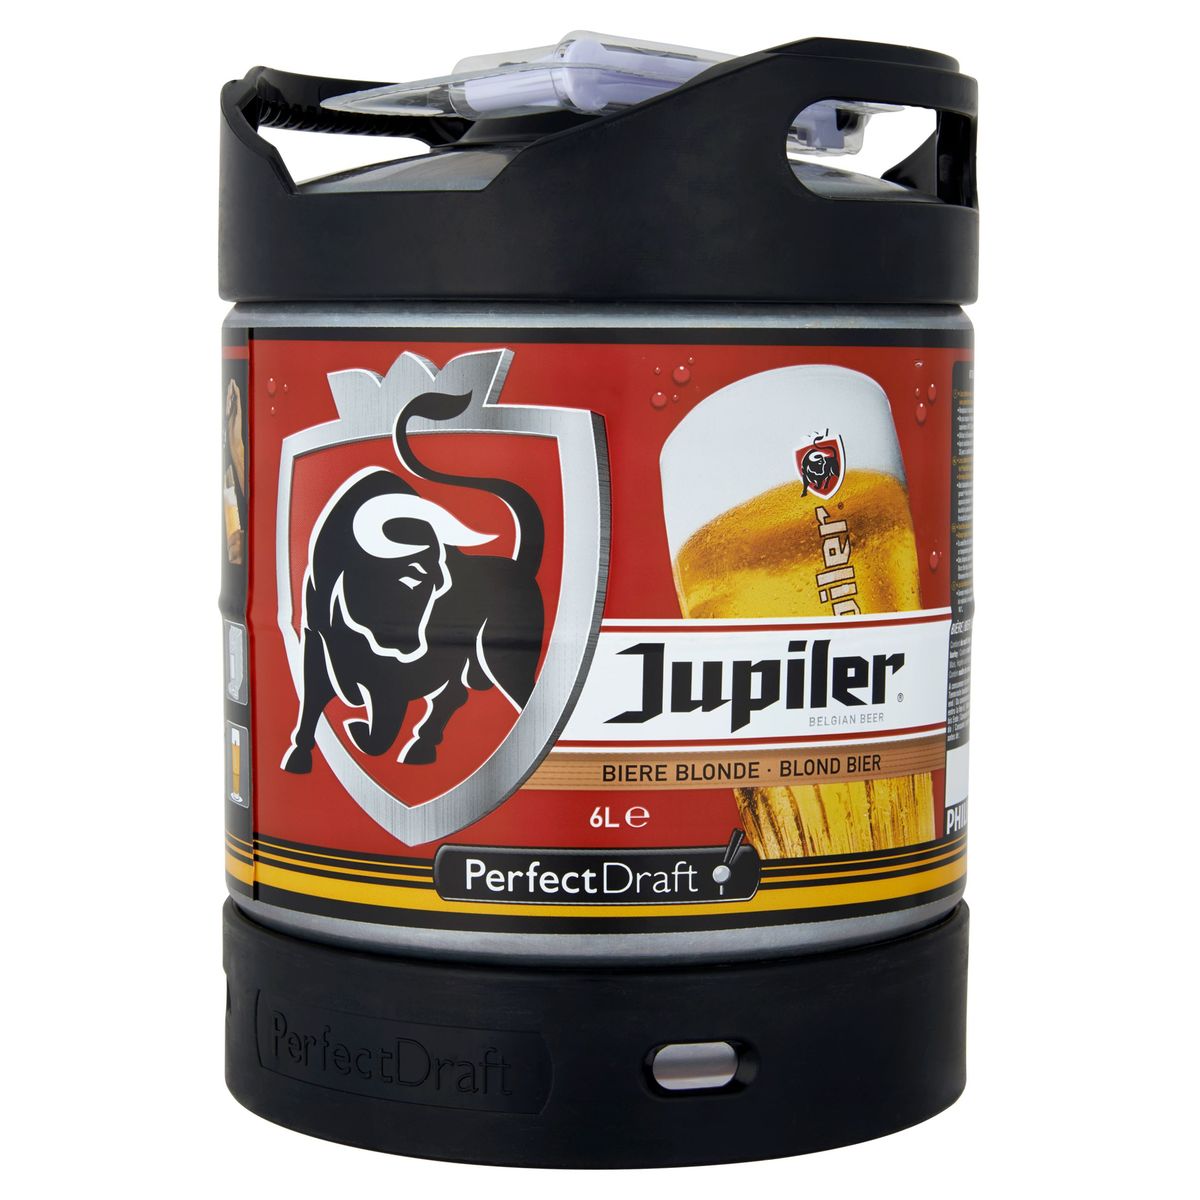 Jupiler Blond Bier Pils 5.2% Alc 6L PerfectDraft vat